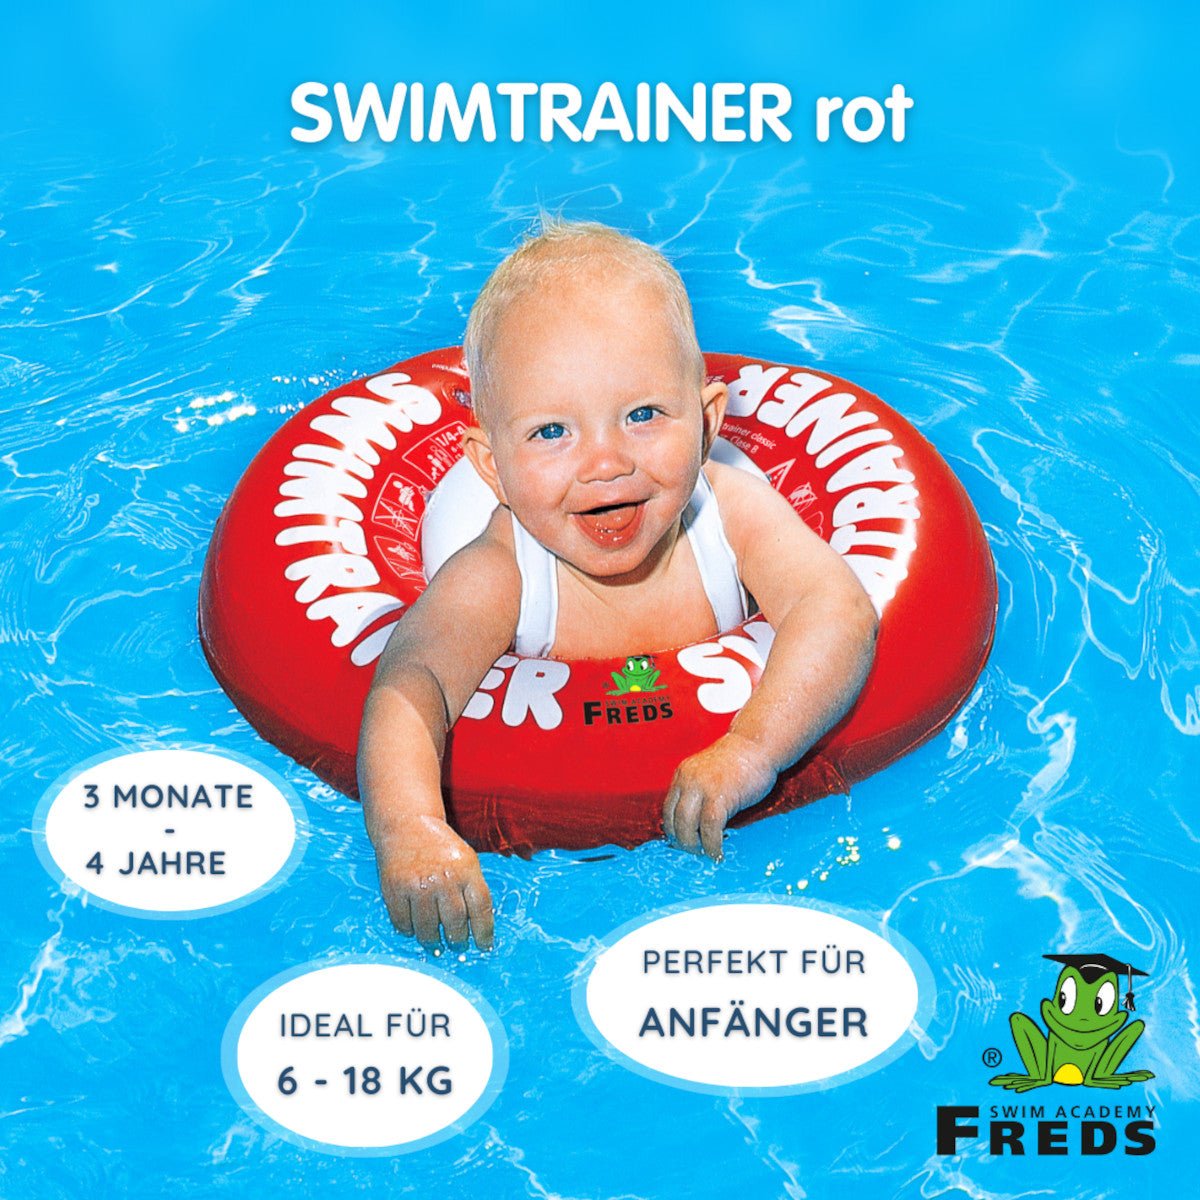 Freds Swim Academy - Schwimm-Trainer Classic rot - ab 3 Monaten - Poolpirat